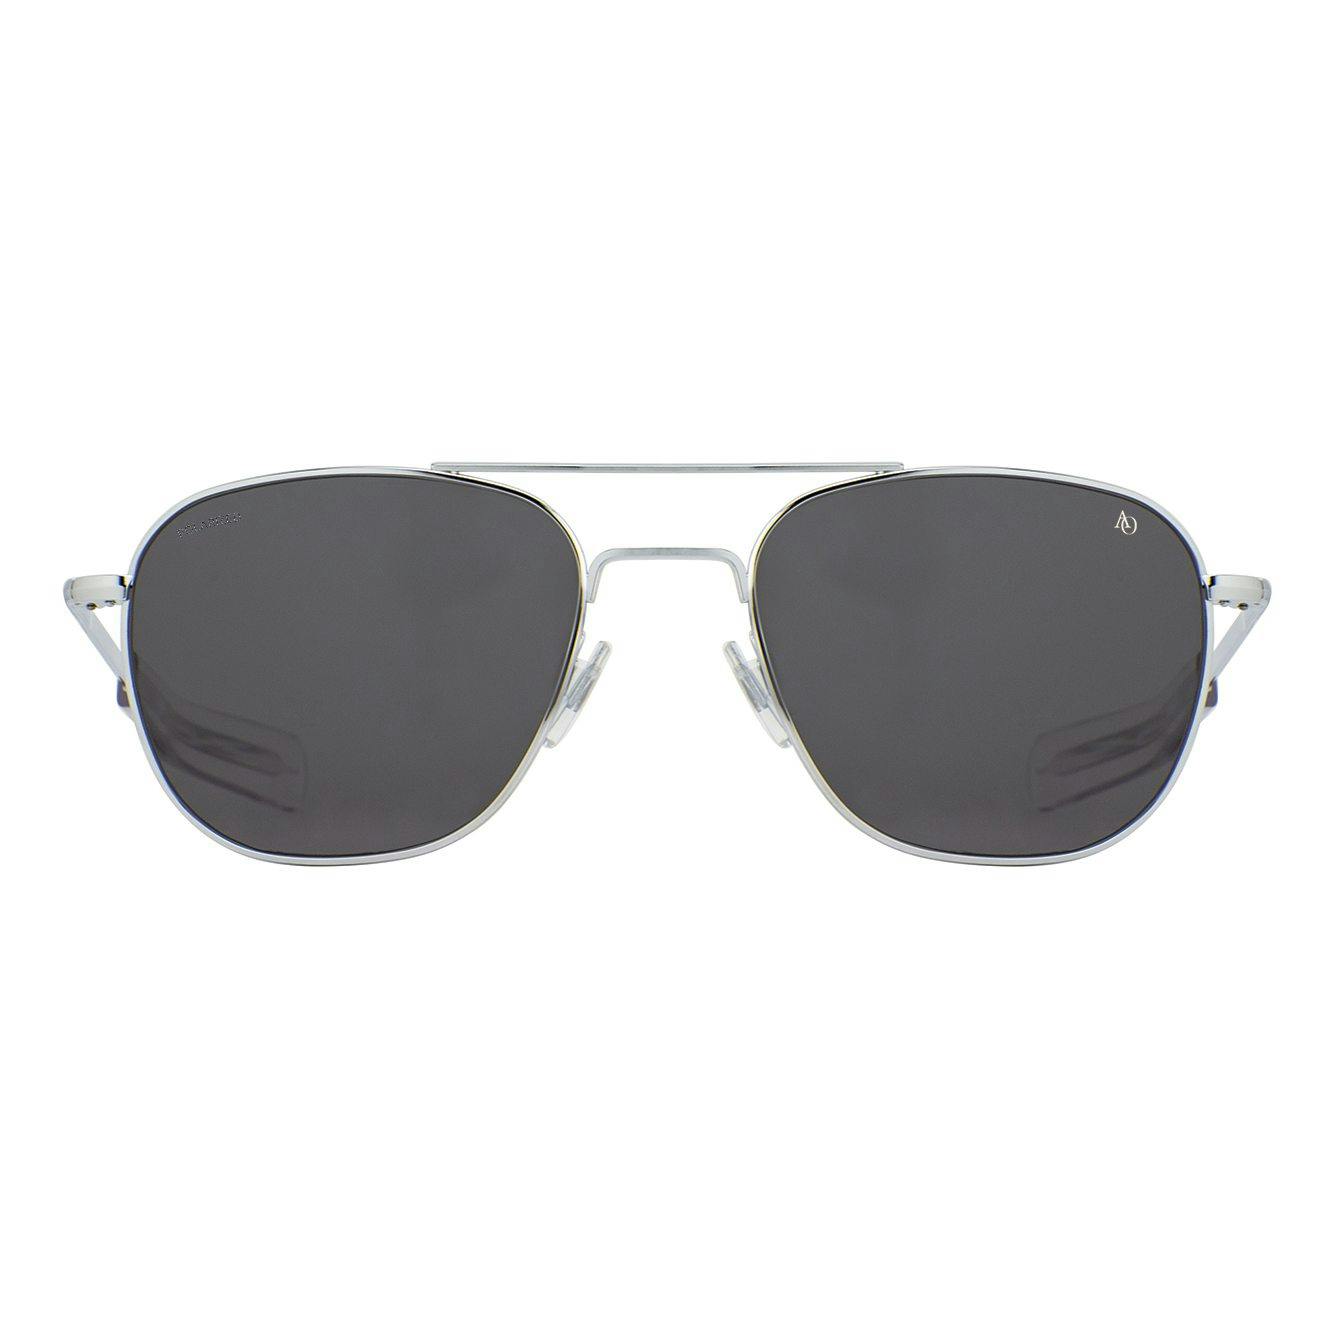 American Optical Original Pilot - Silver/Polarized Nylon Grey, Sunglasses